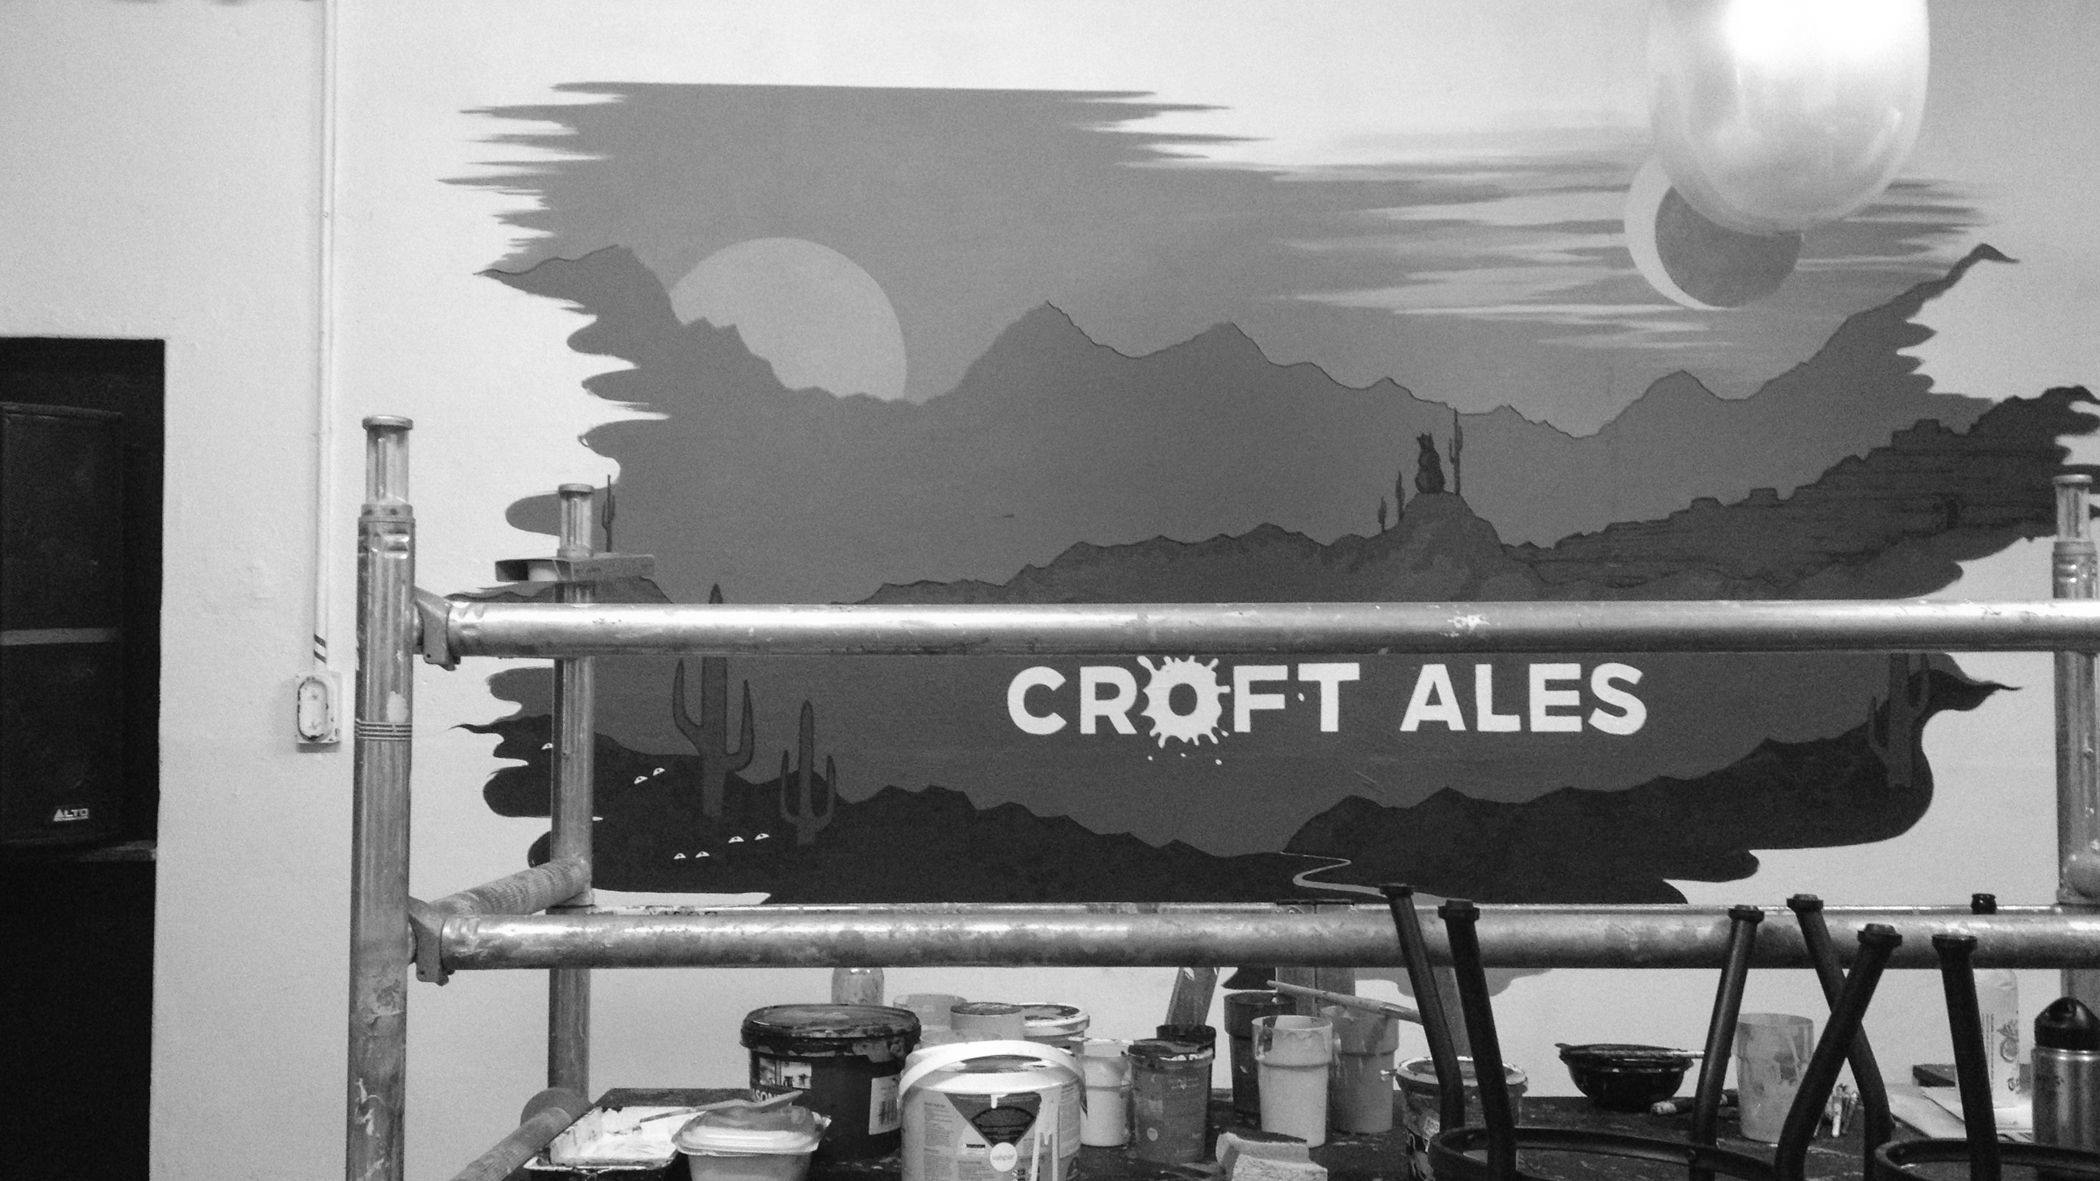 croft ales mural